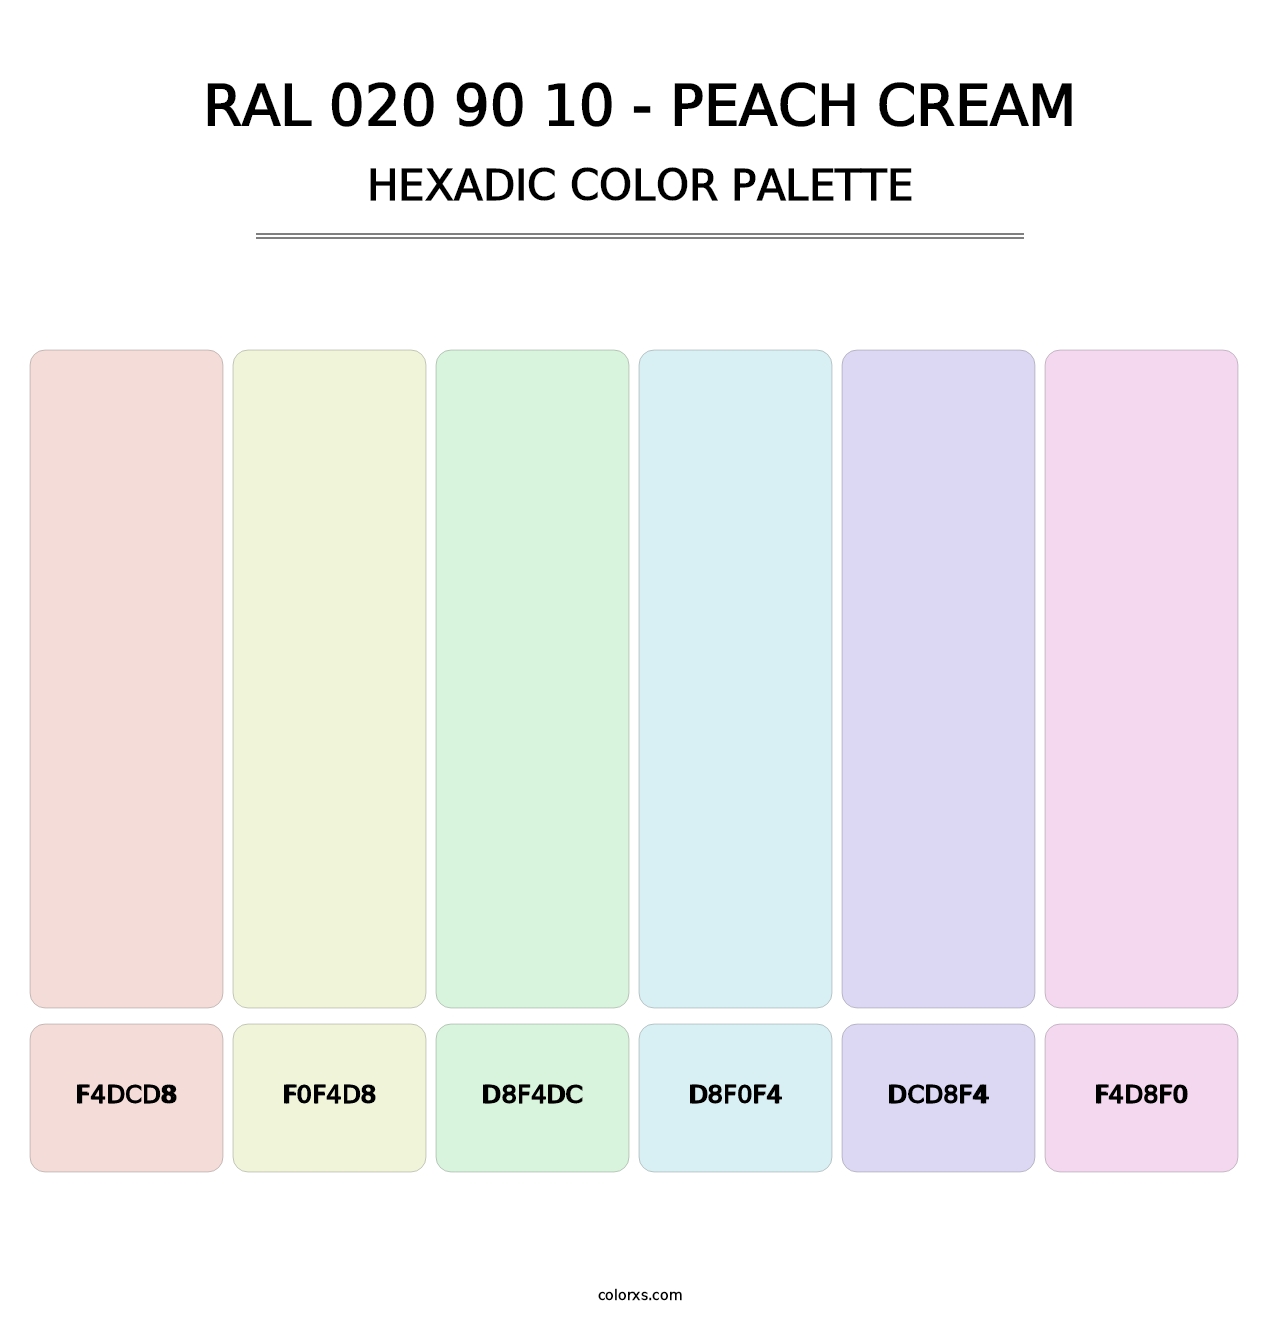 RAL 020 90 10 - Peach Cream - Hexadic Color Palette